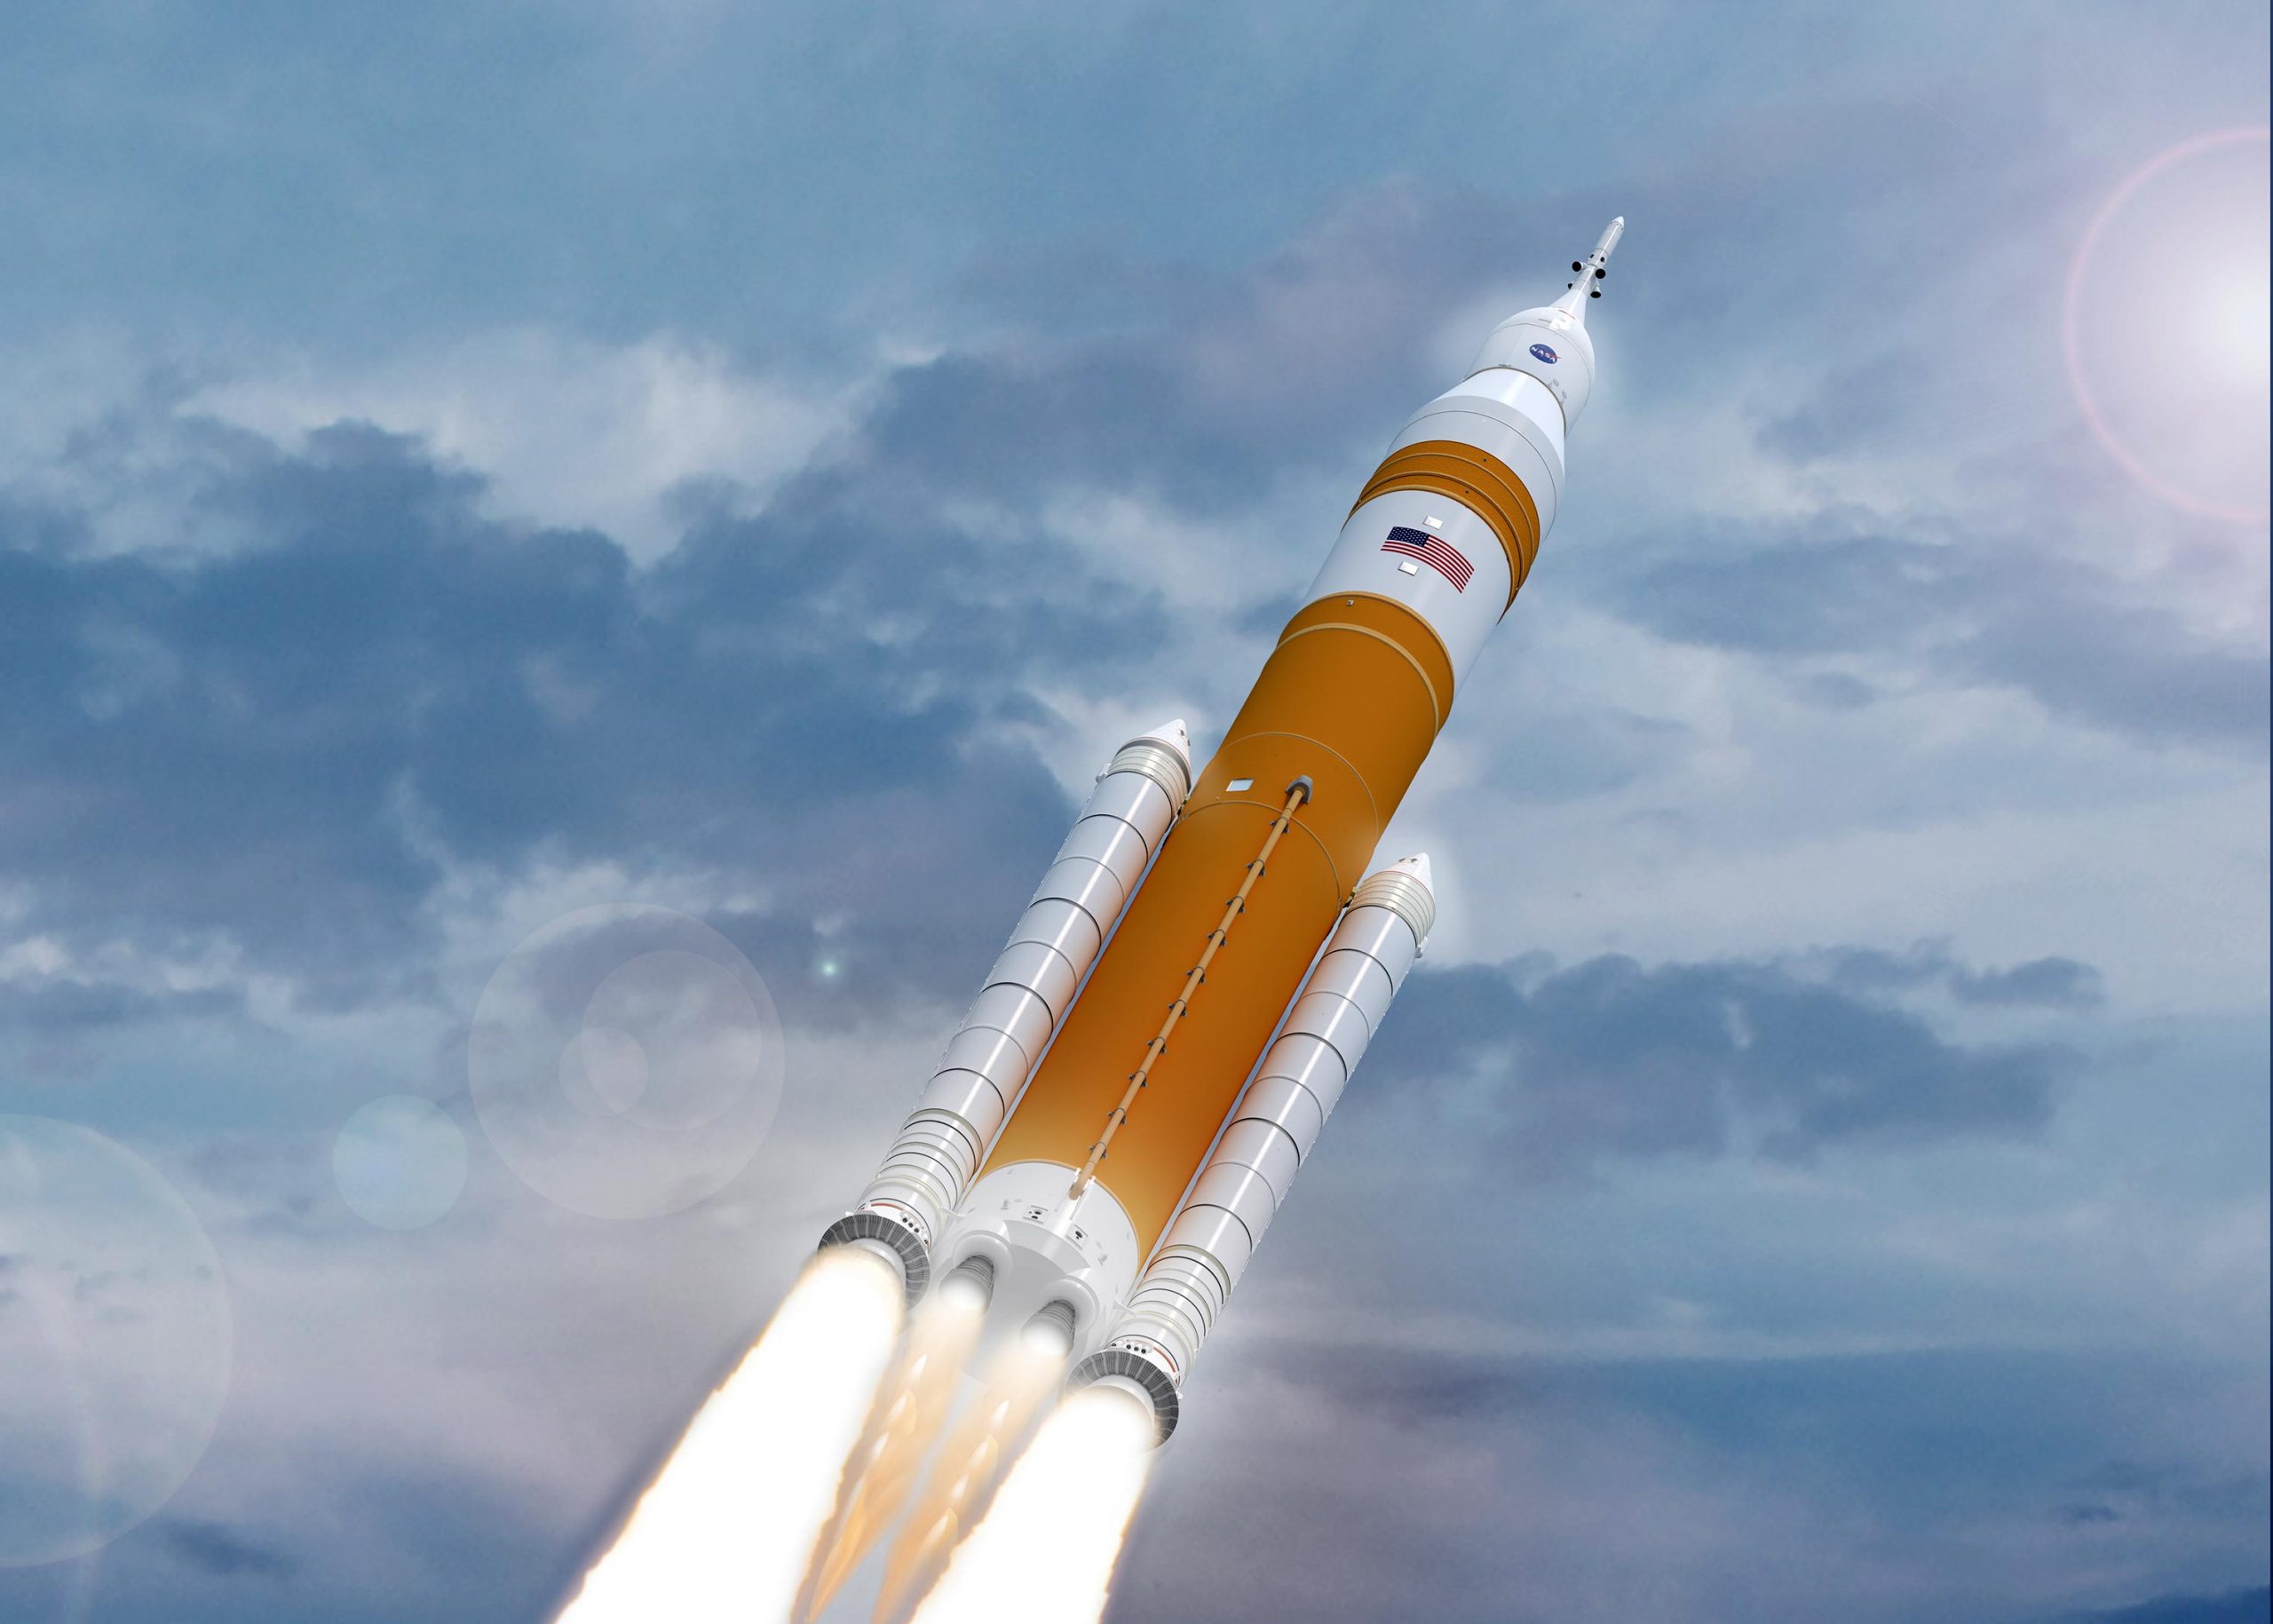 Artemis I SLS Rocket Core Stage Engineering Testing Complete thumbnail